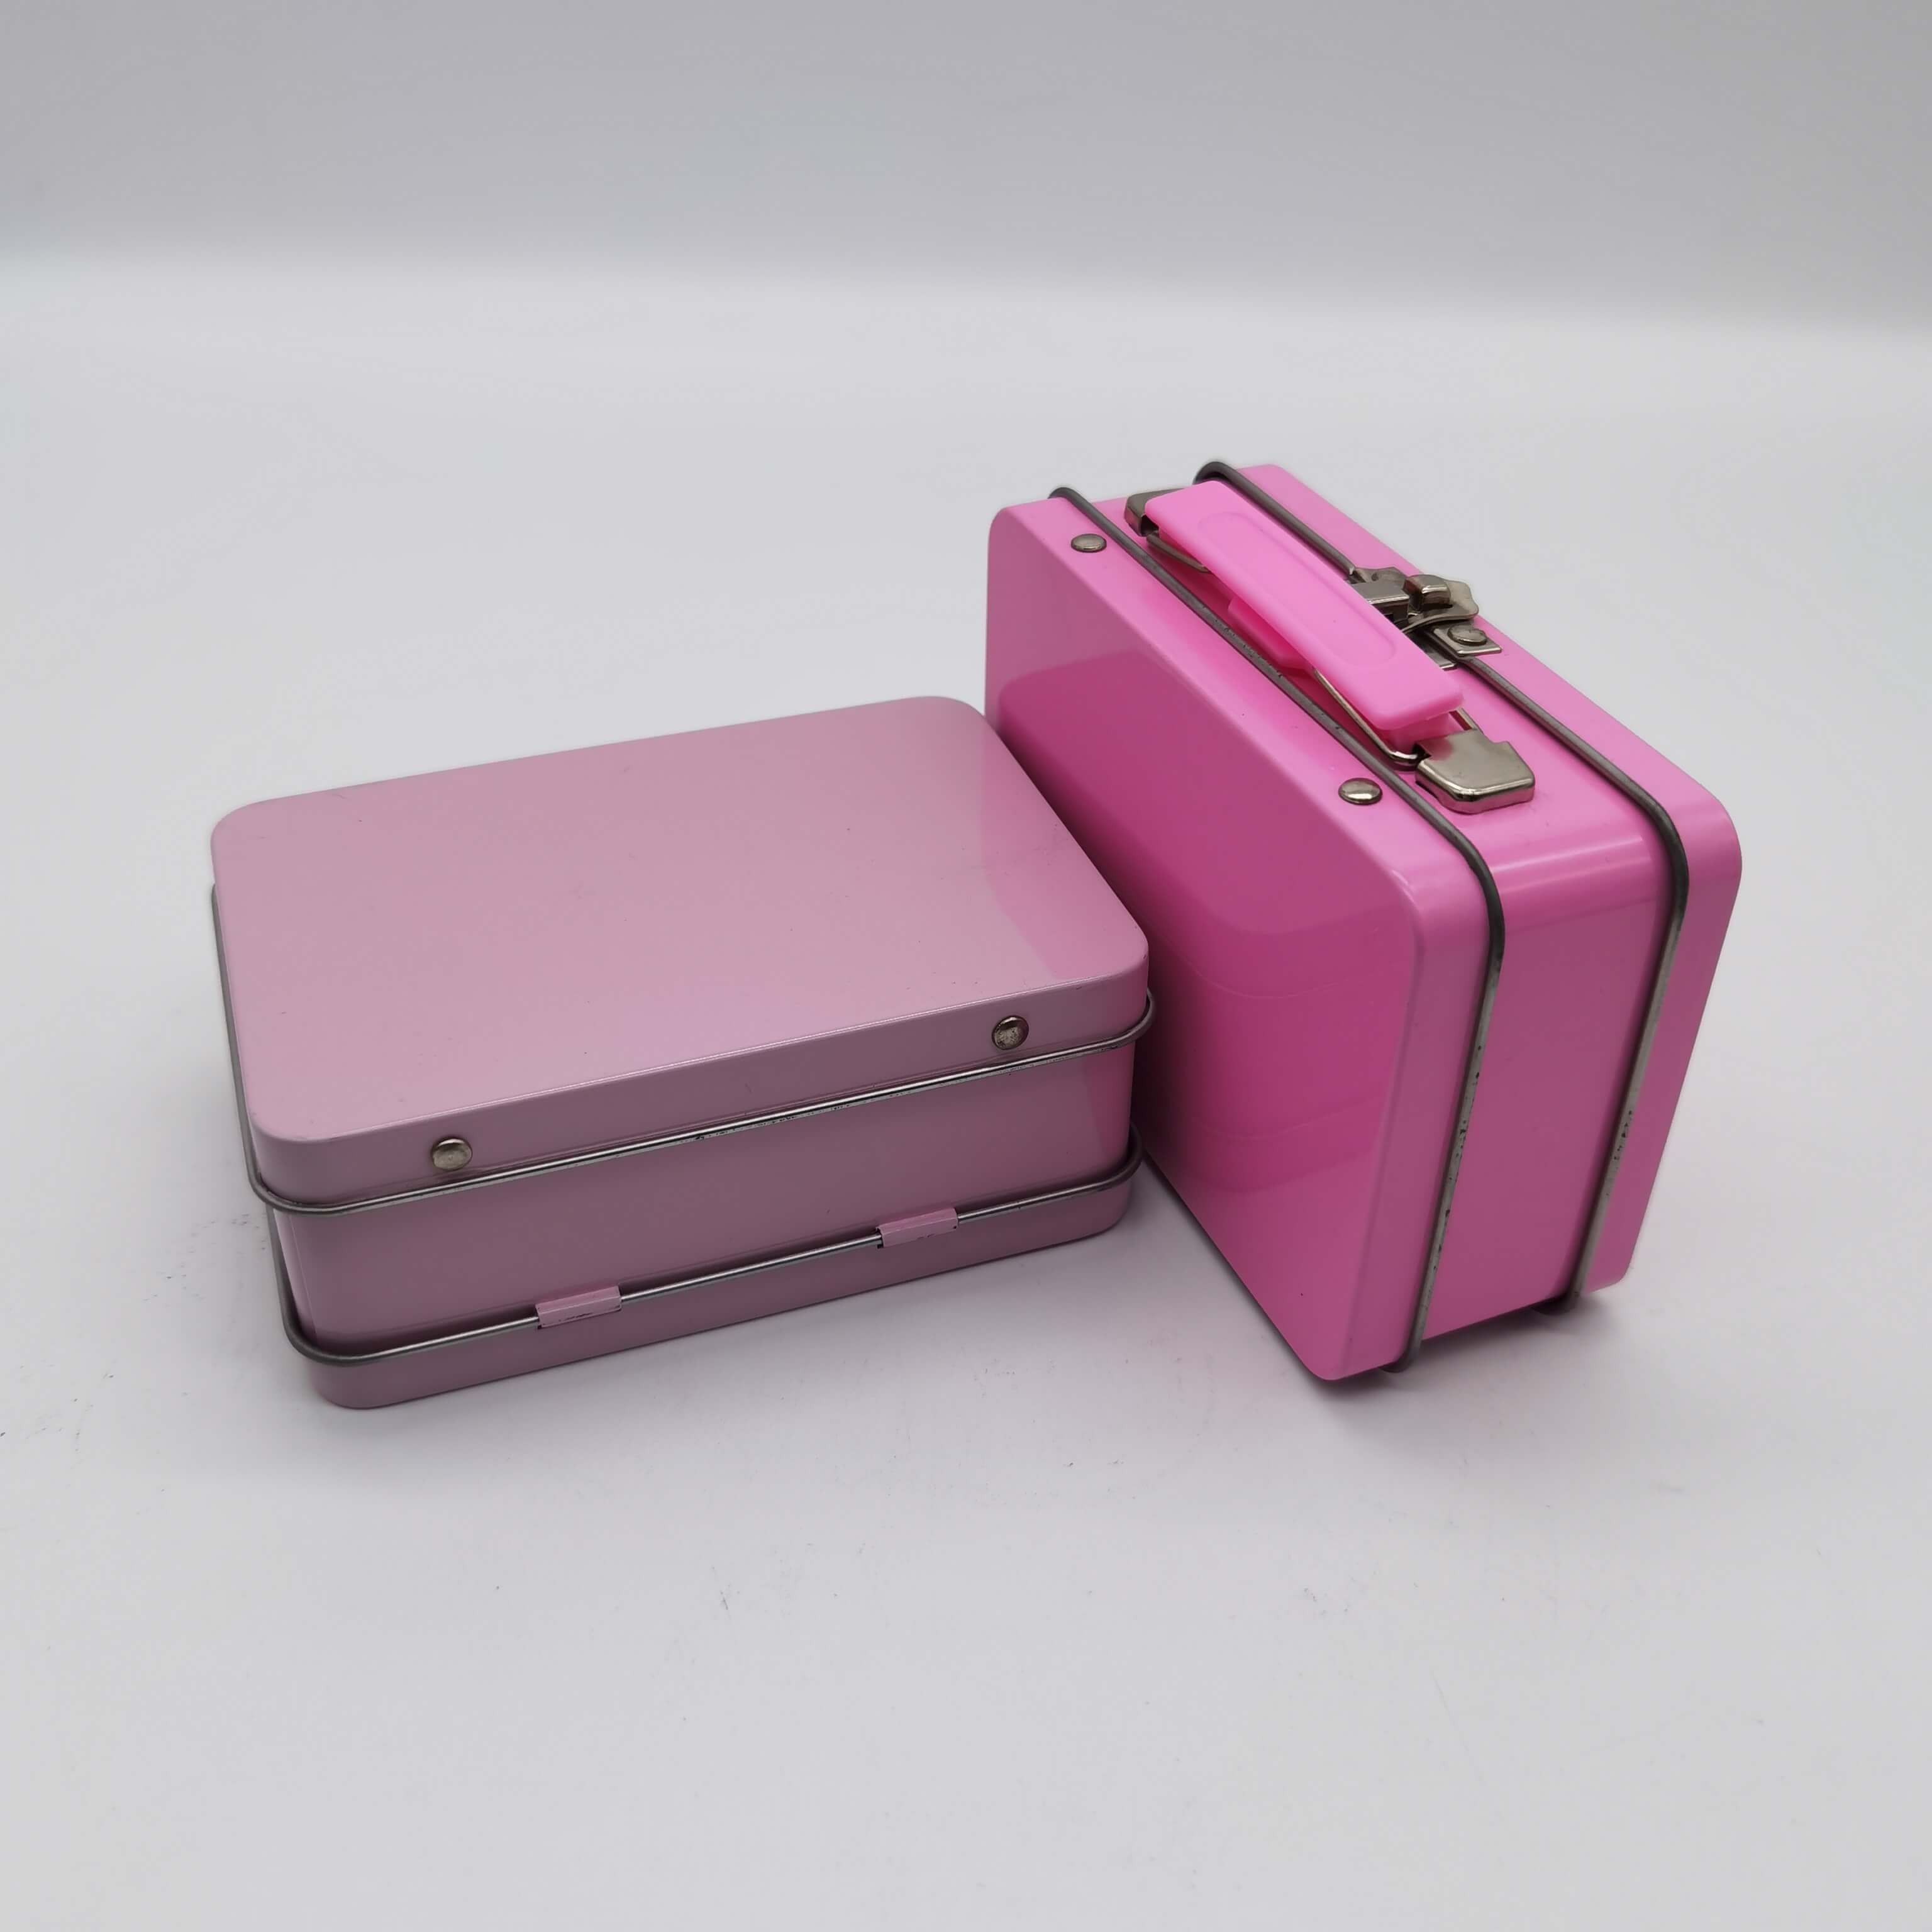 China Lip Gloss packing iron box Manufacturers, Factory - Buy Lip Gloss packing iron box at Good Price - Haohang